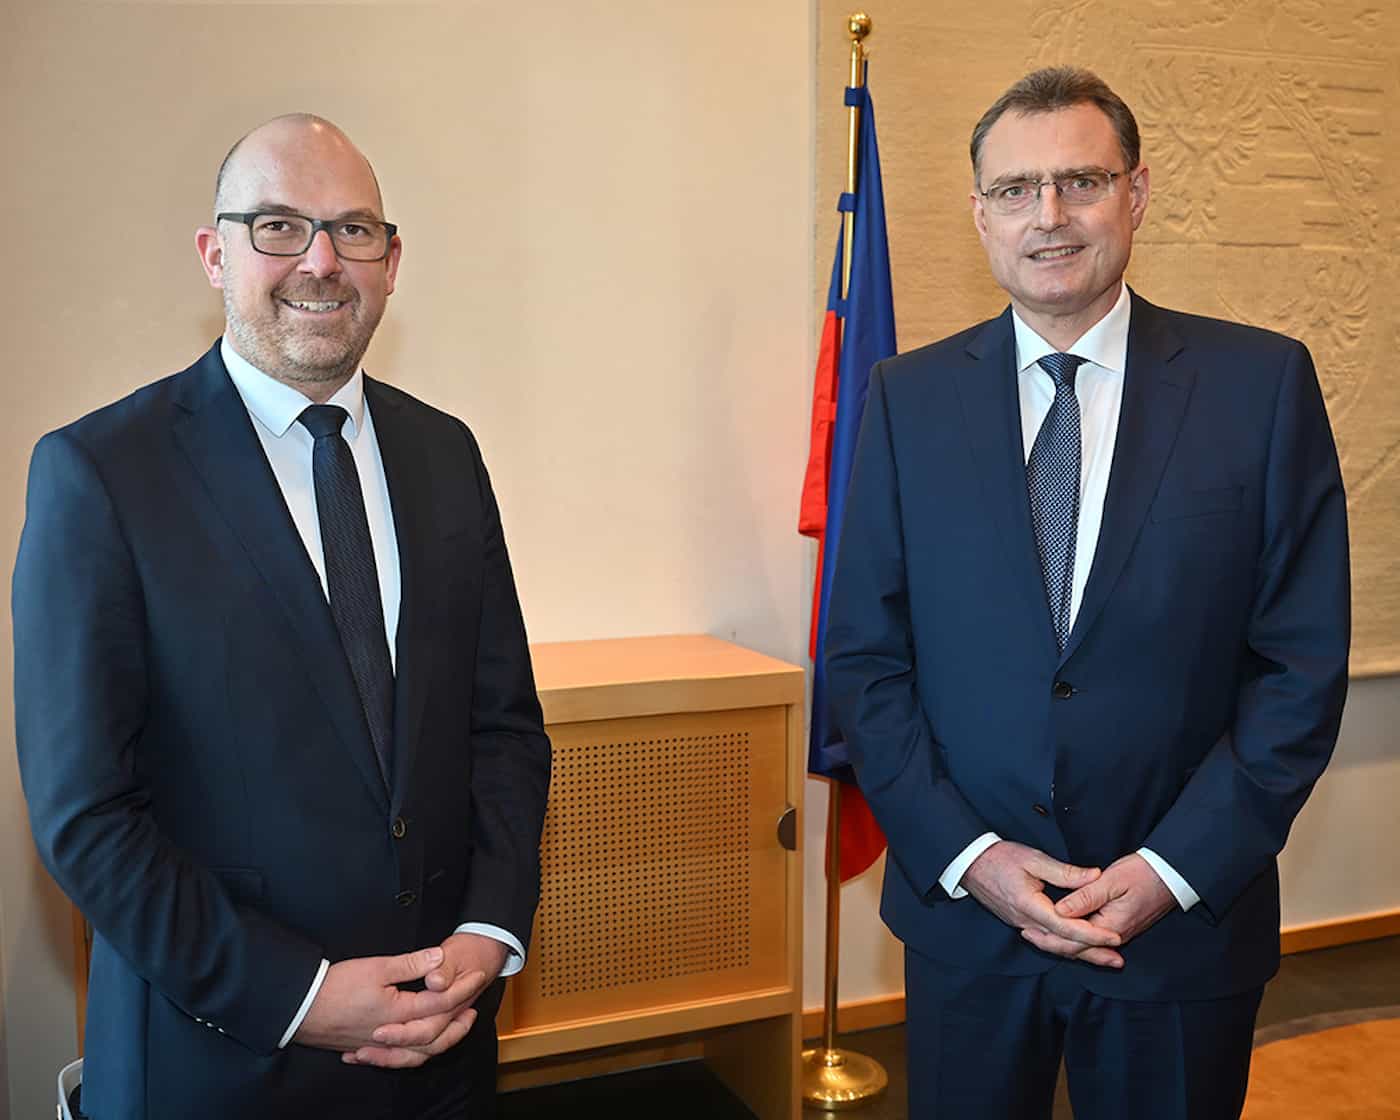 Nationalbankpräsident Thomas Jordan zu Besuch in Vaduz